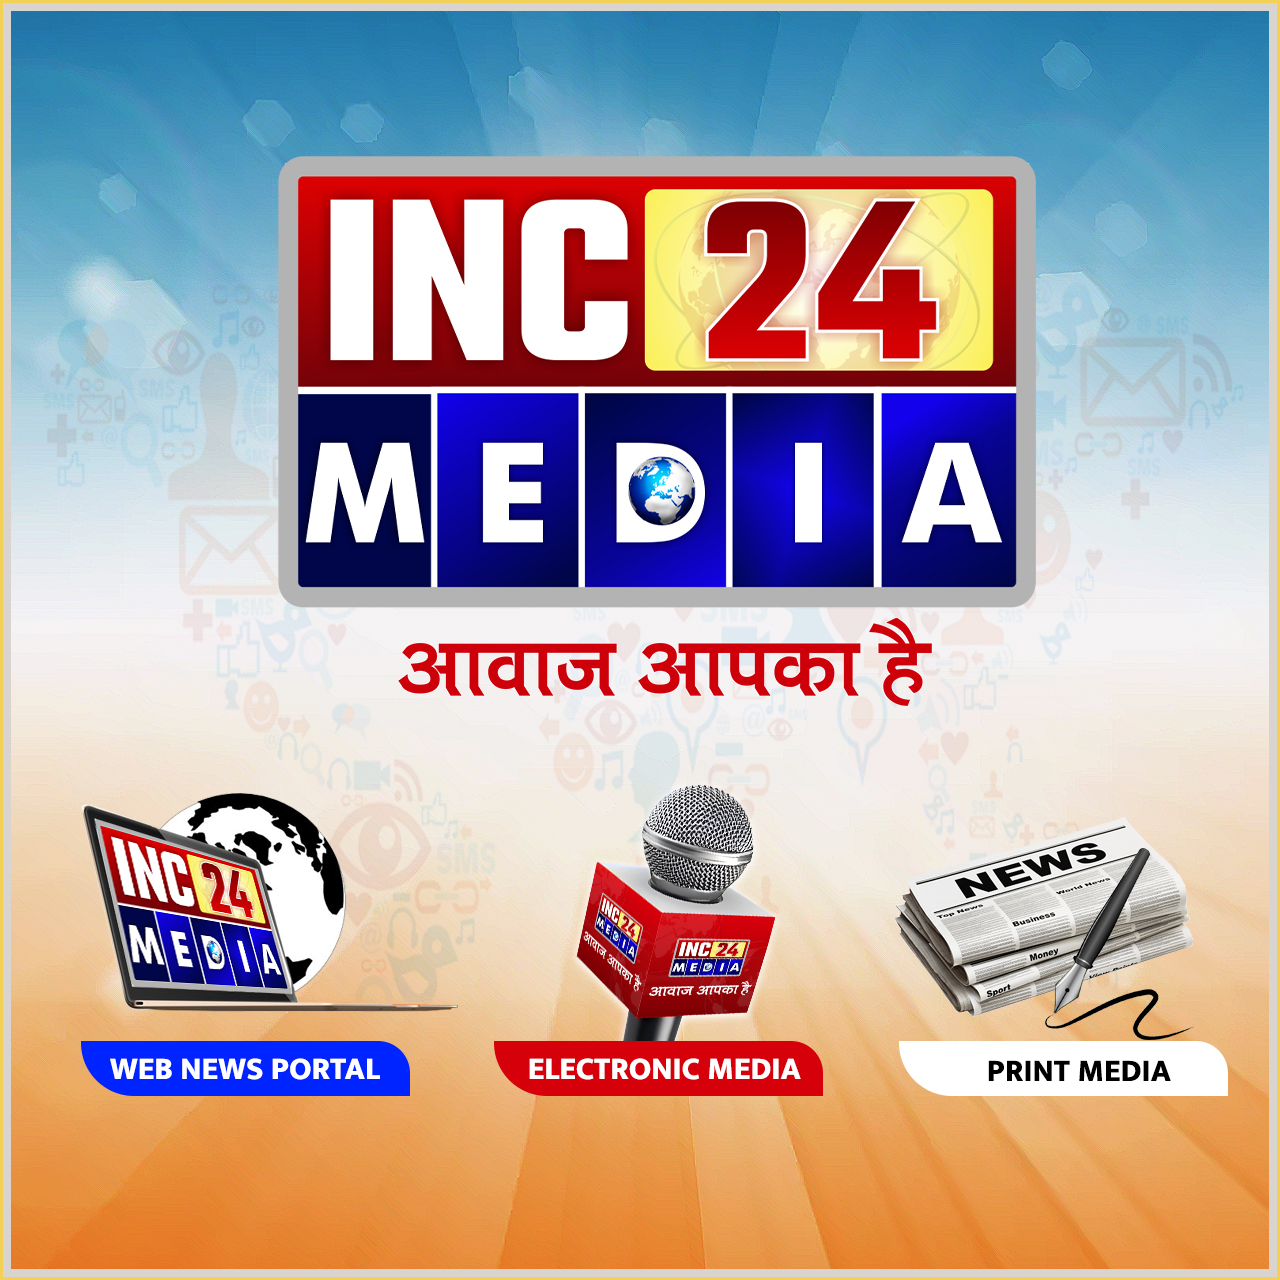 INC24 MEDIA